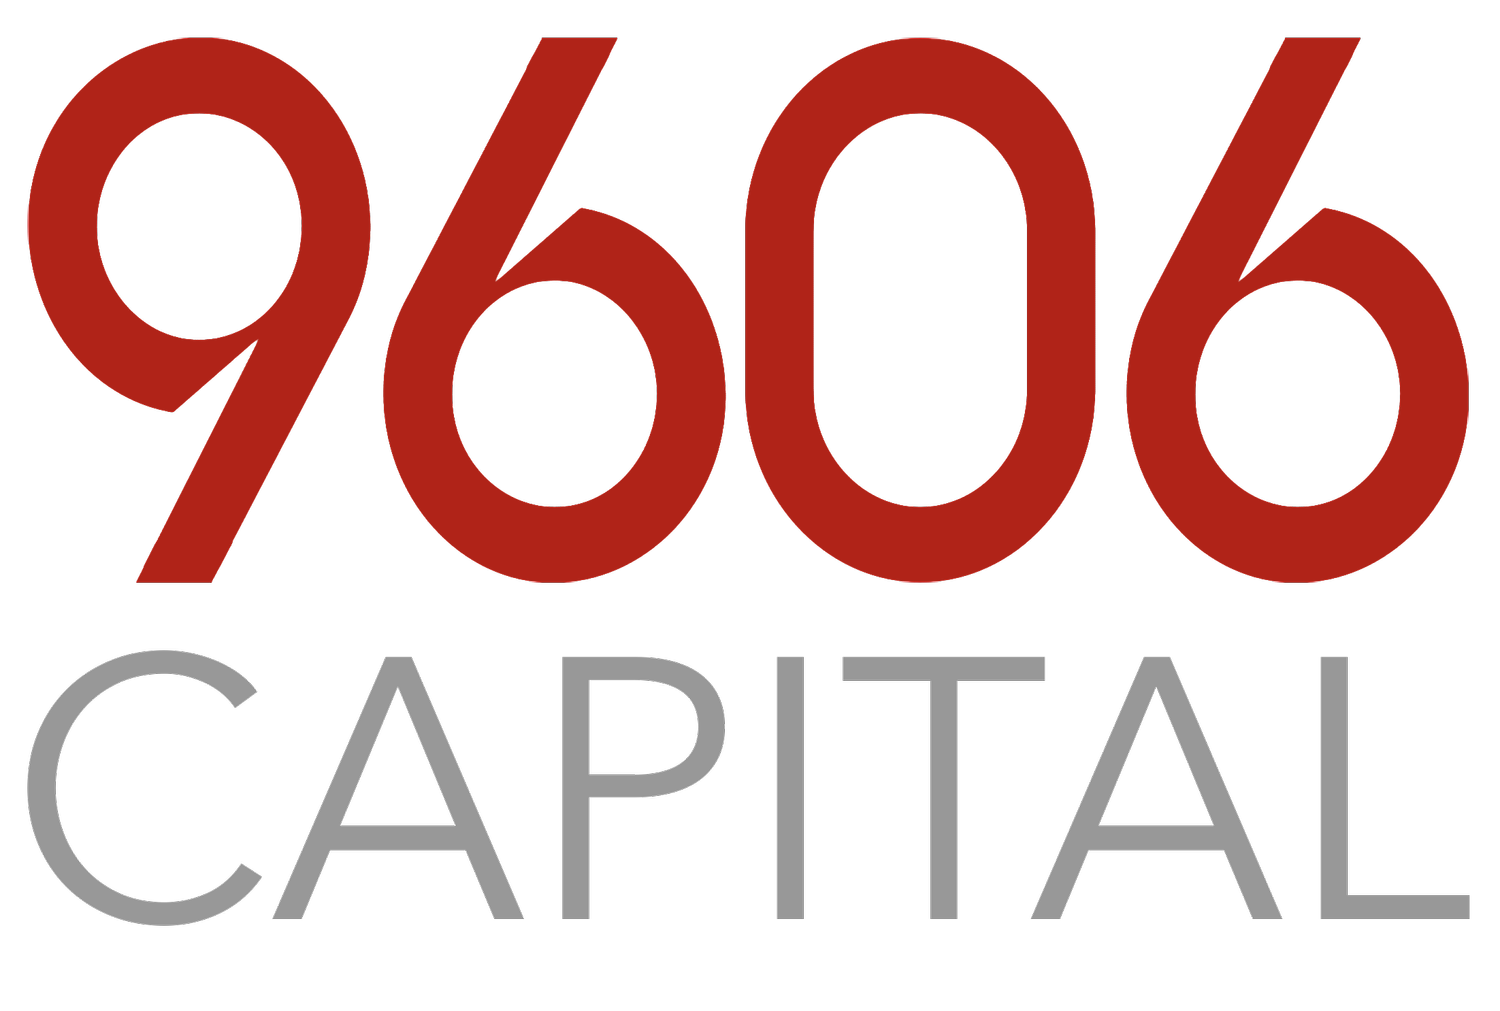 9606 Capital